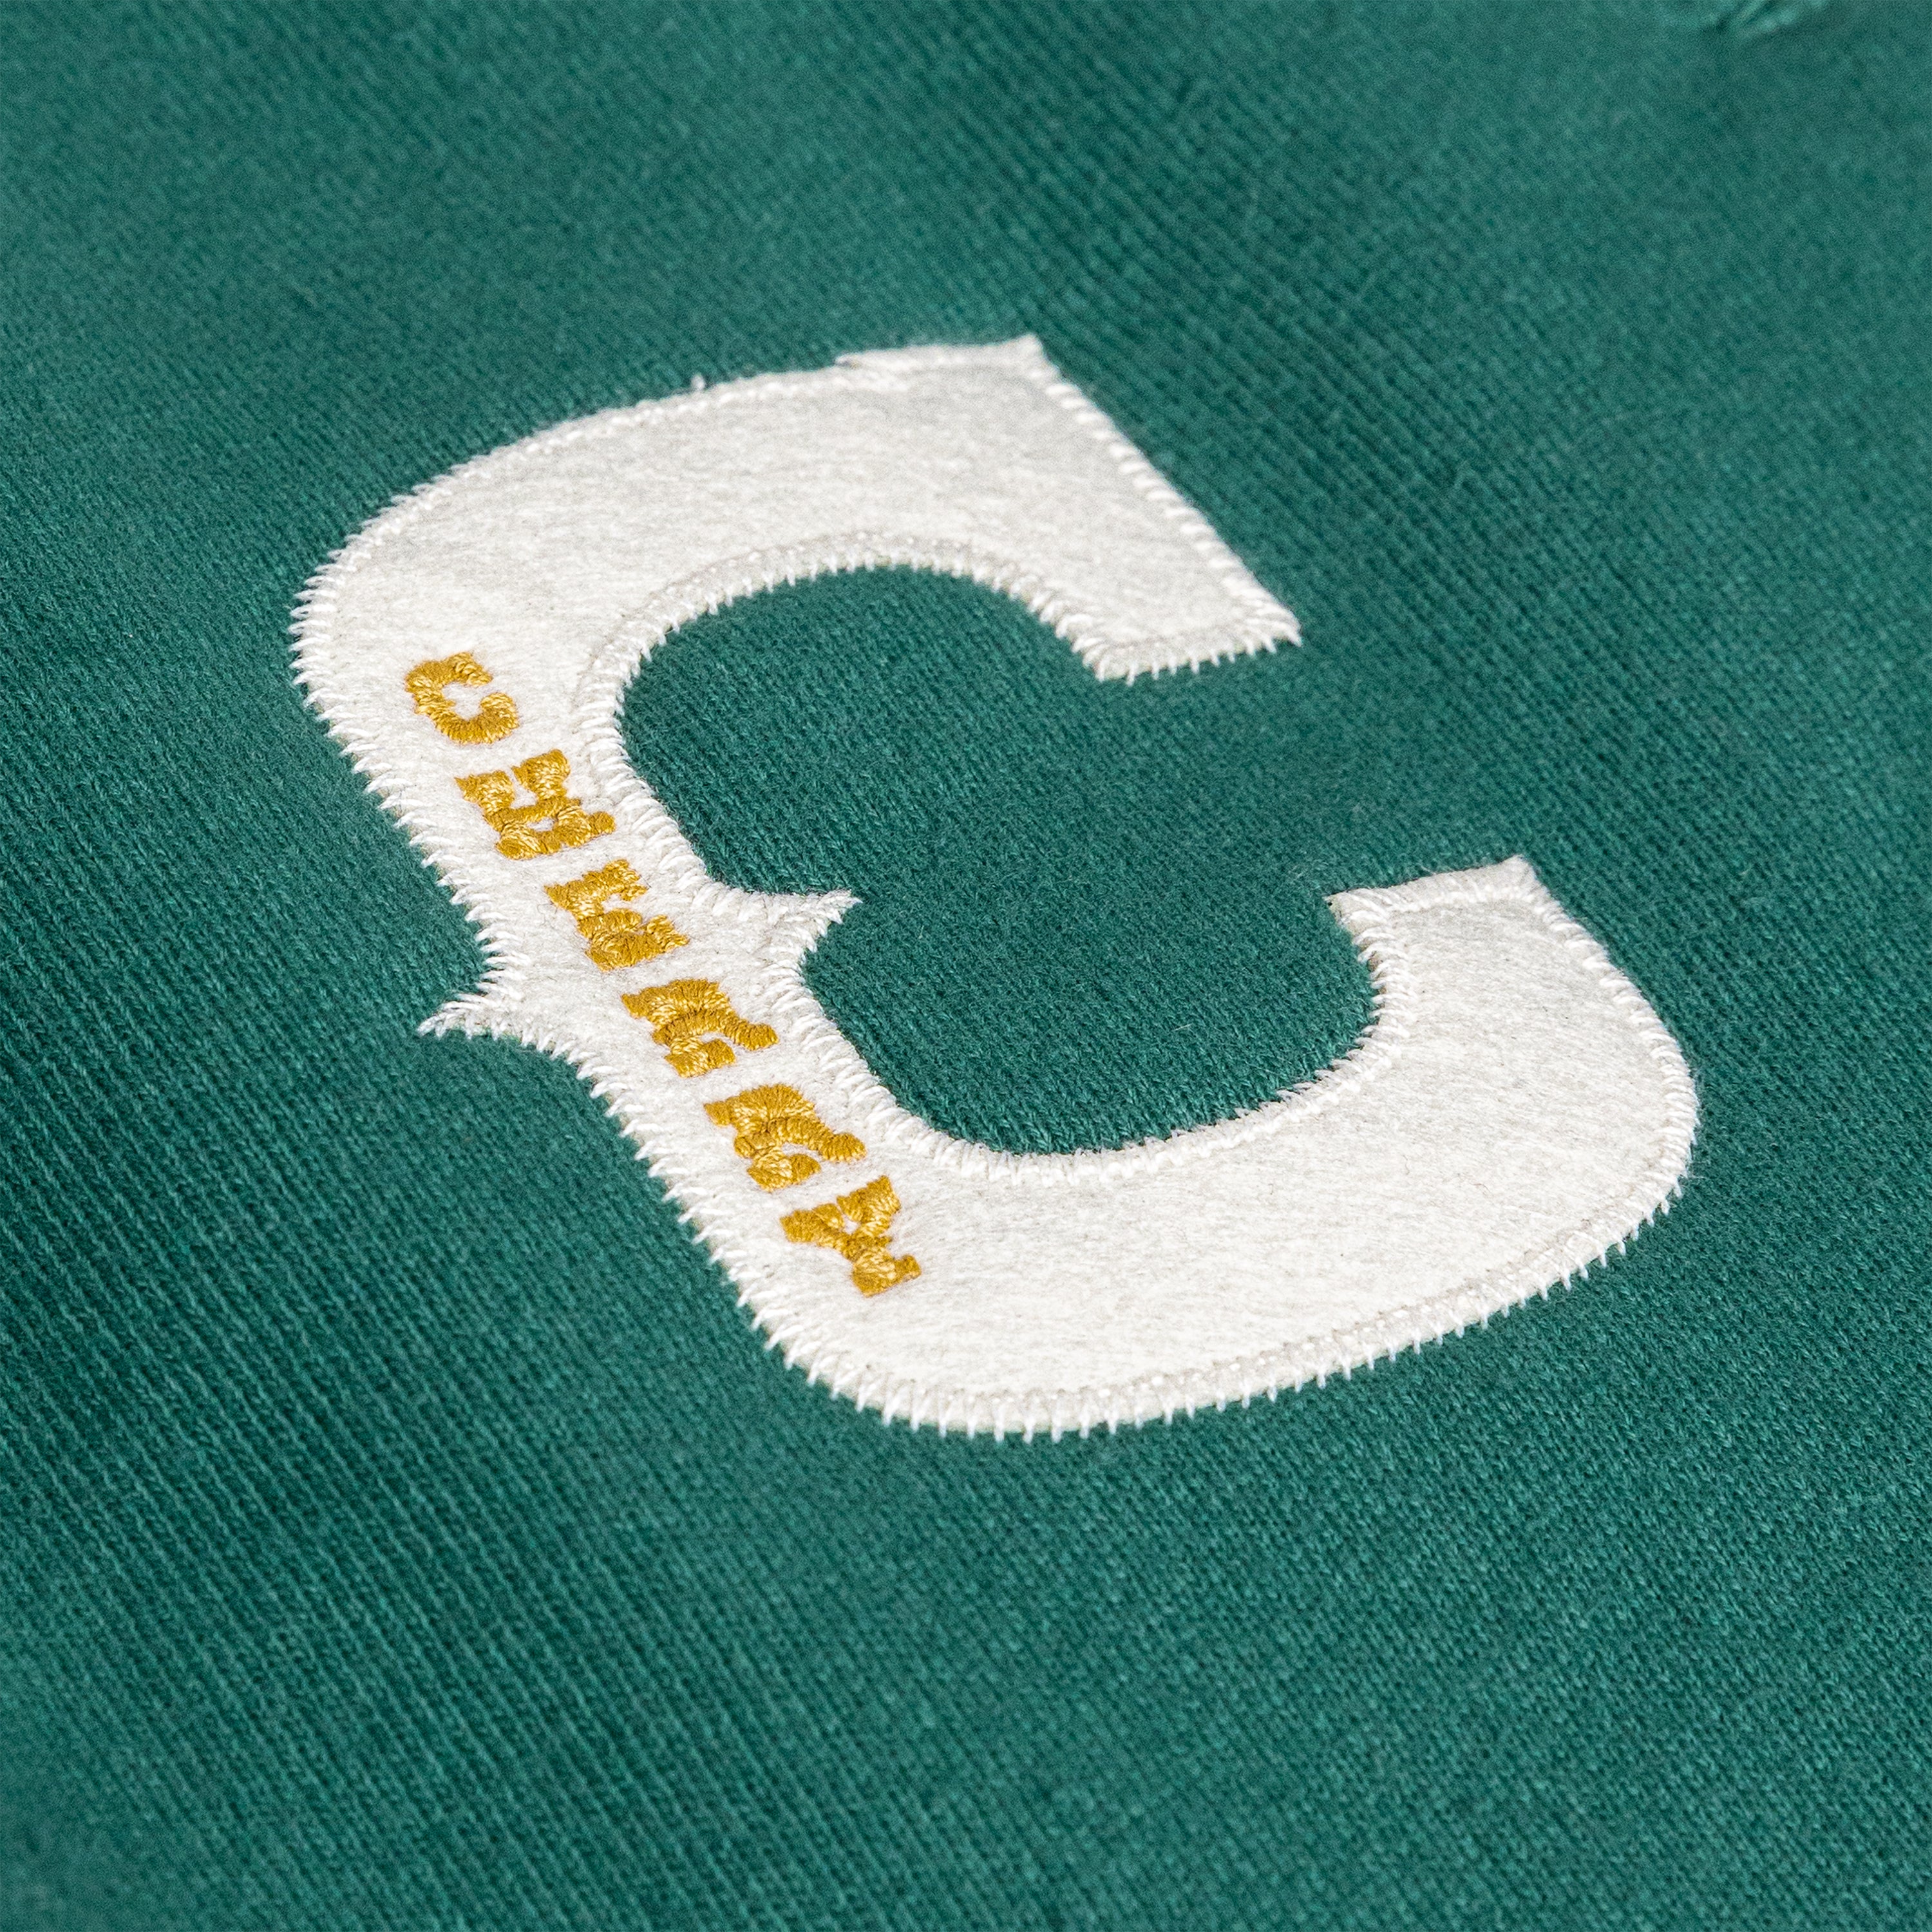 Western Athletic Sweatpants (Emerald)